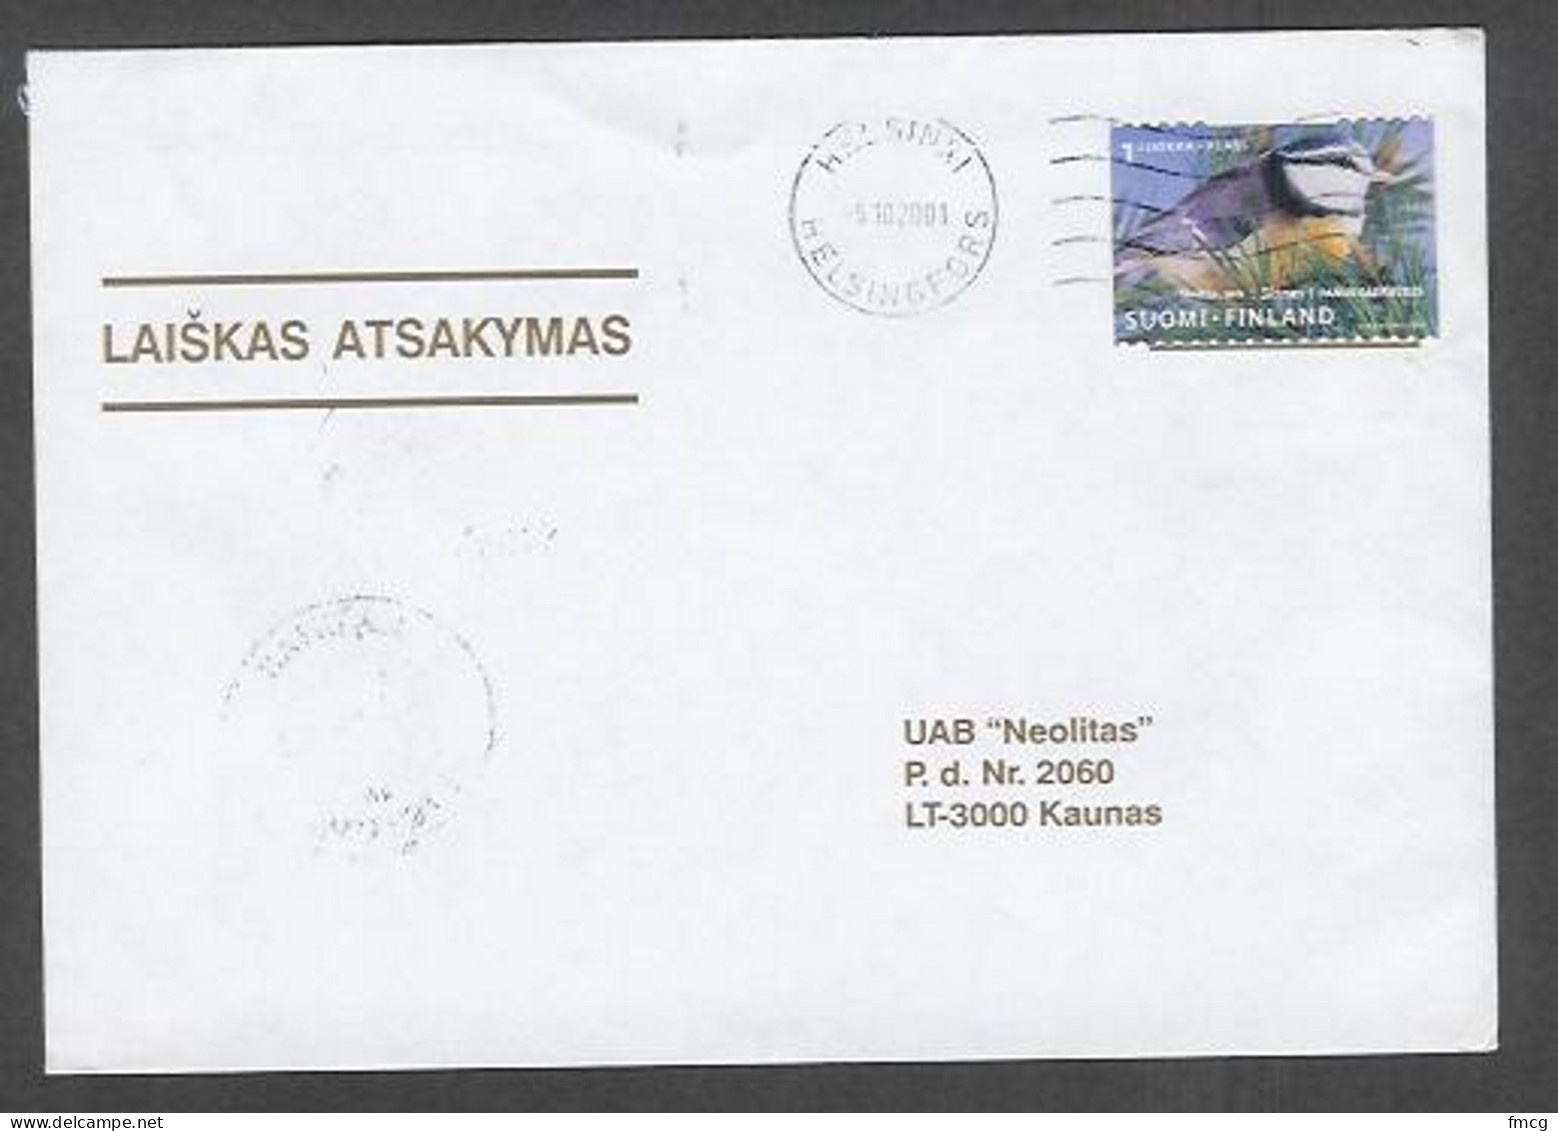 2001 Bird Stamp, Helsinki (5.10.2001) To Kaunas Lithuania - Covers & Documents